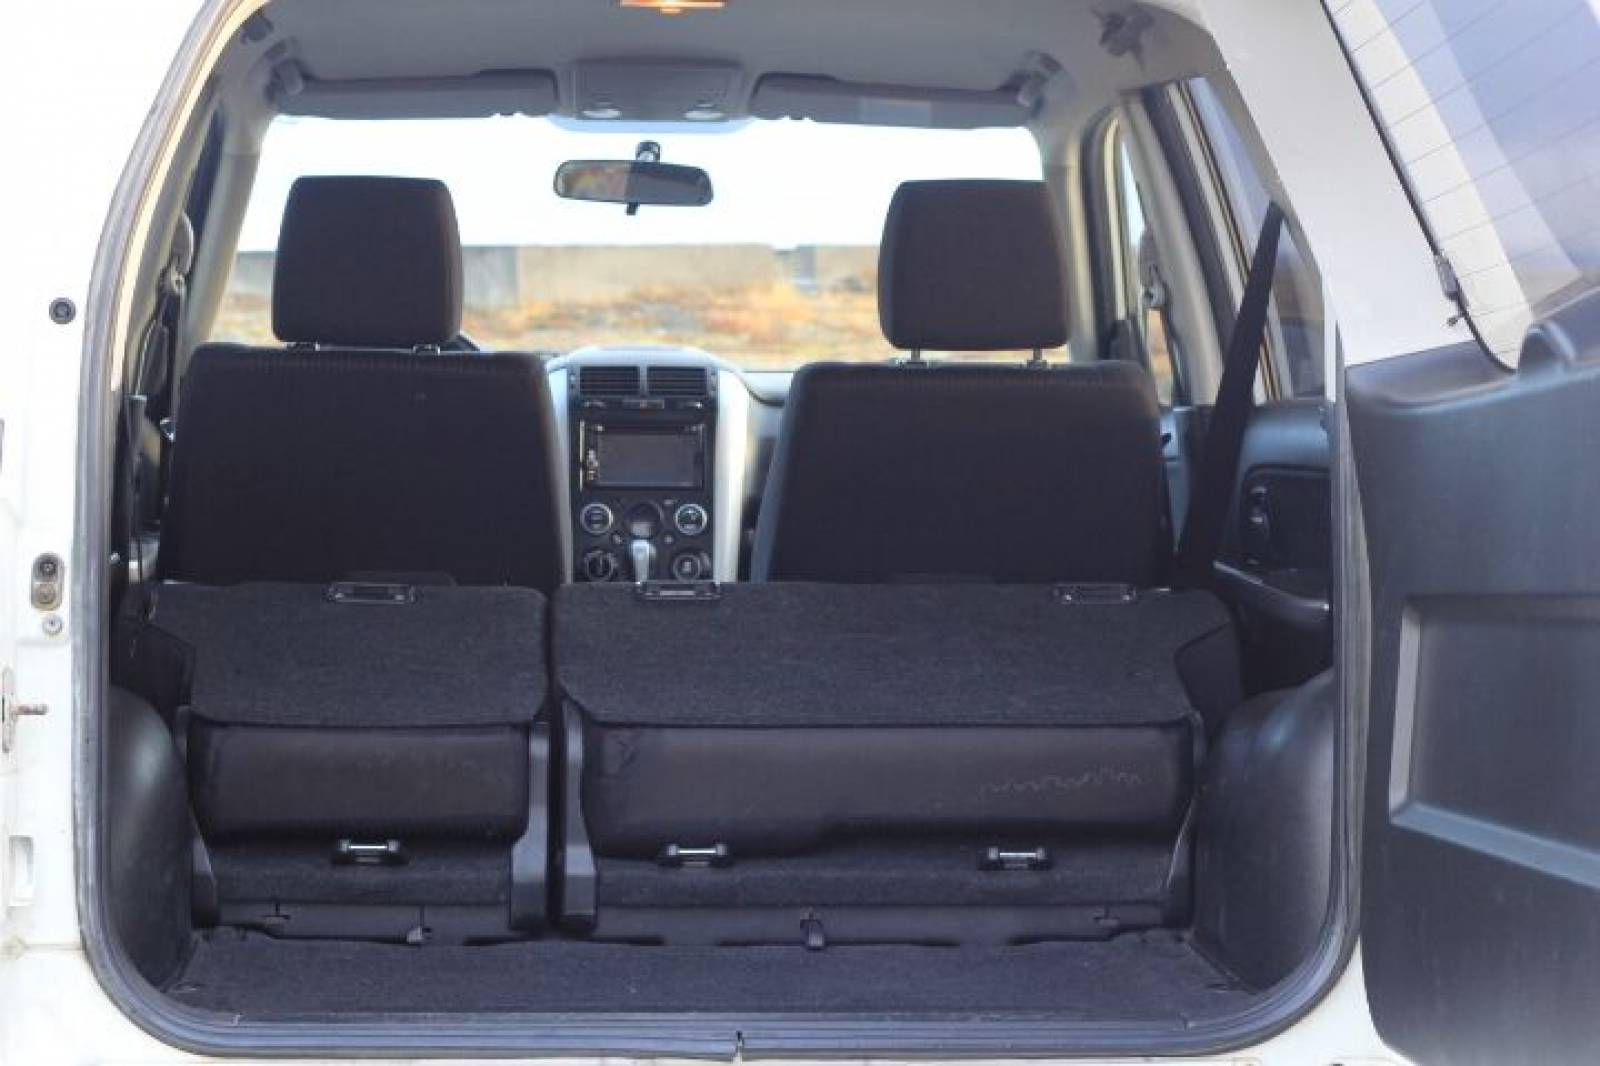 Espace bagages Suzuki Grand Vitara avec sièges arrière rabattus